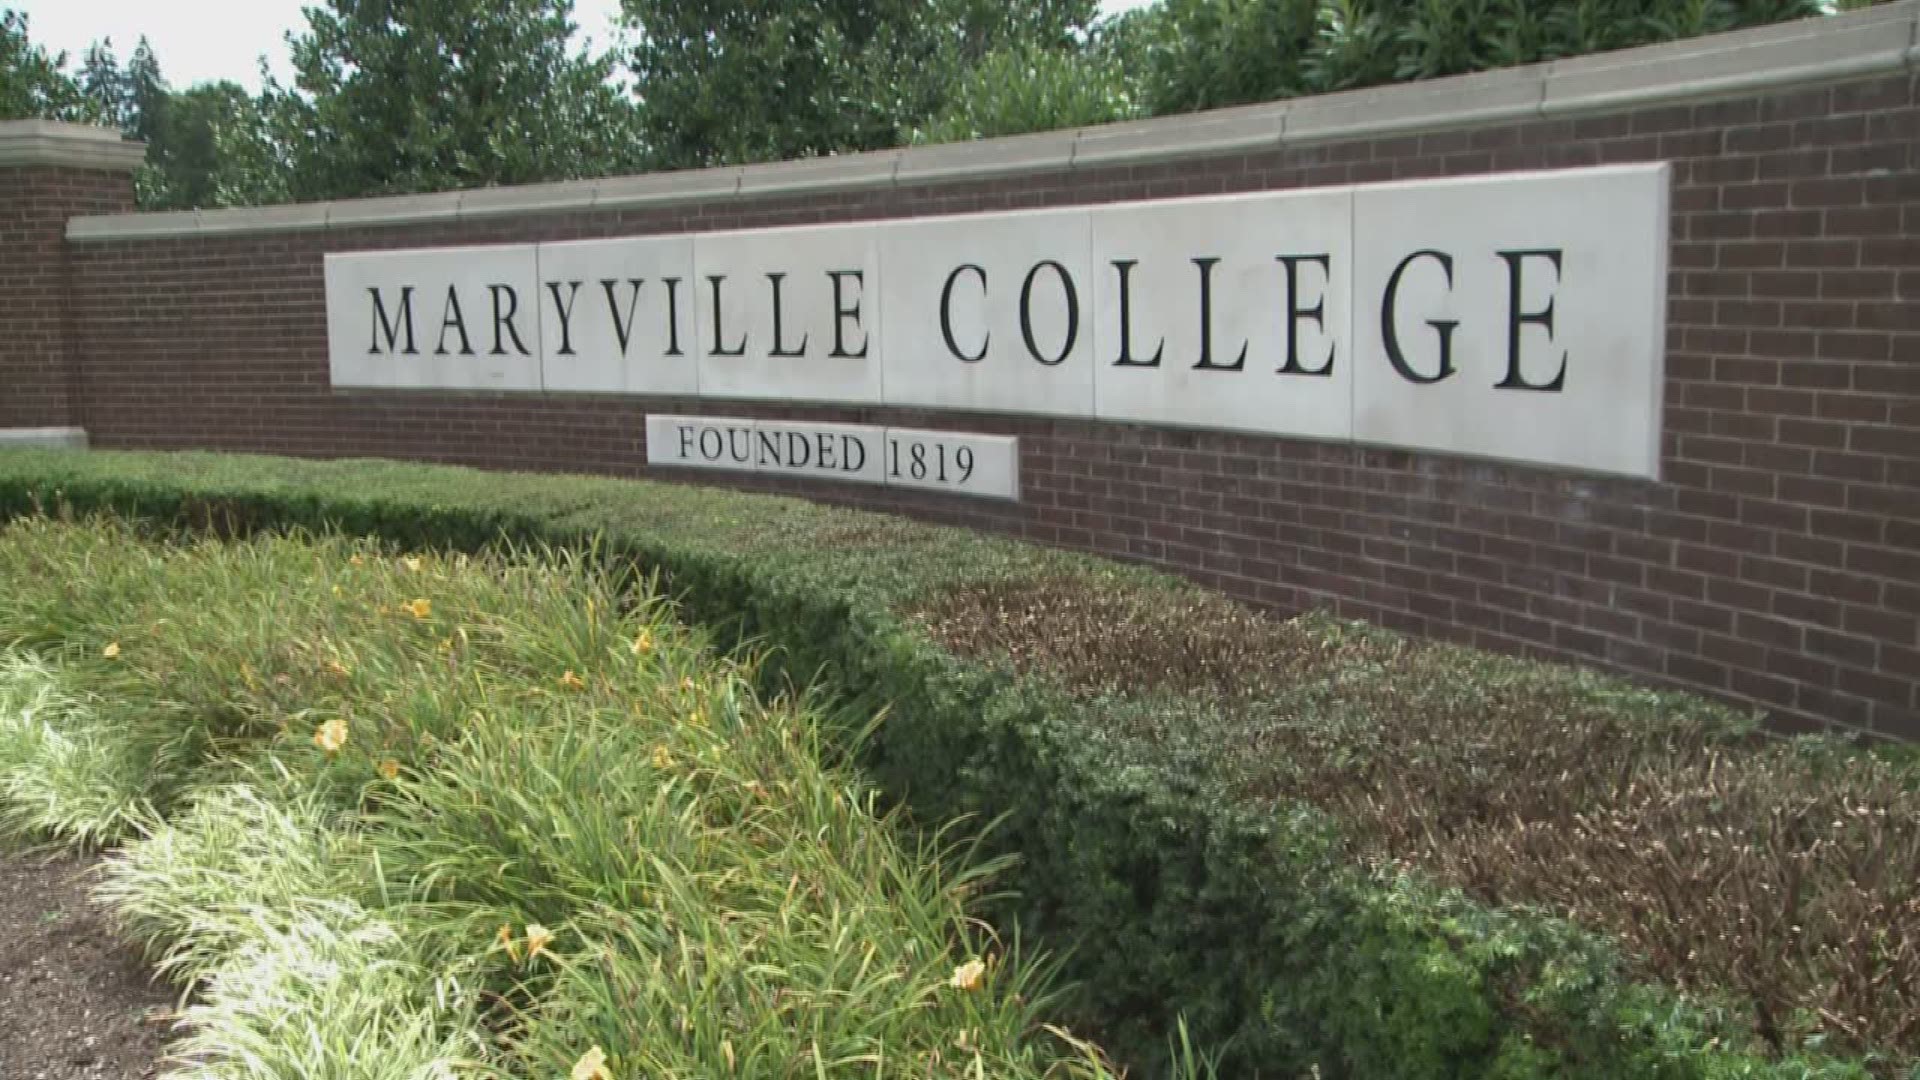 Maryville College celebrates 200 years